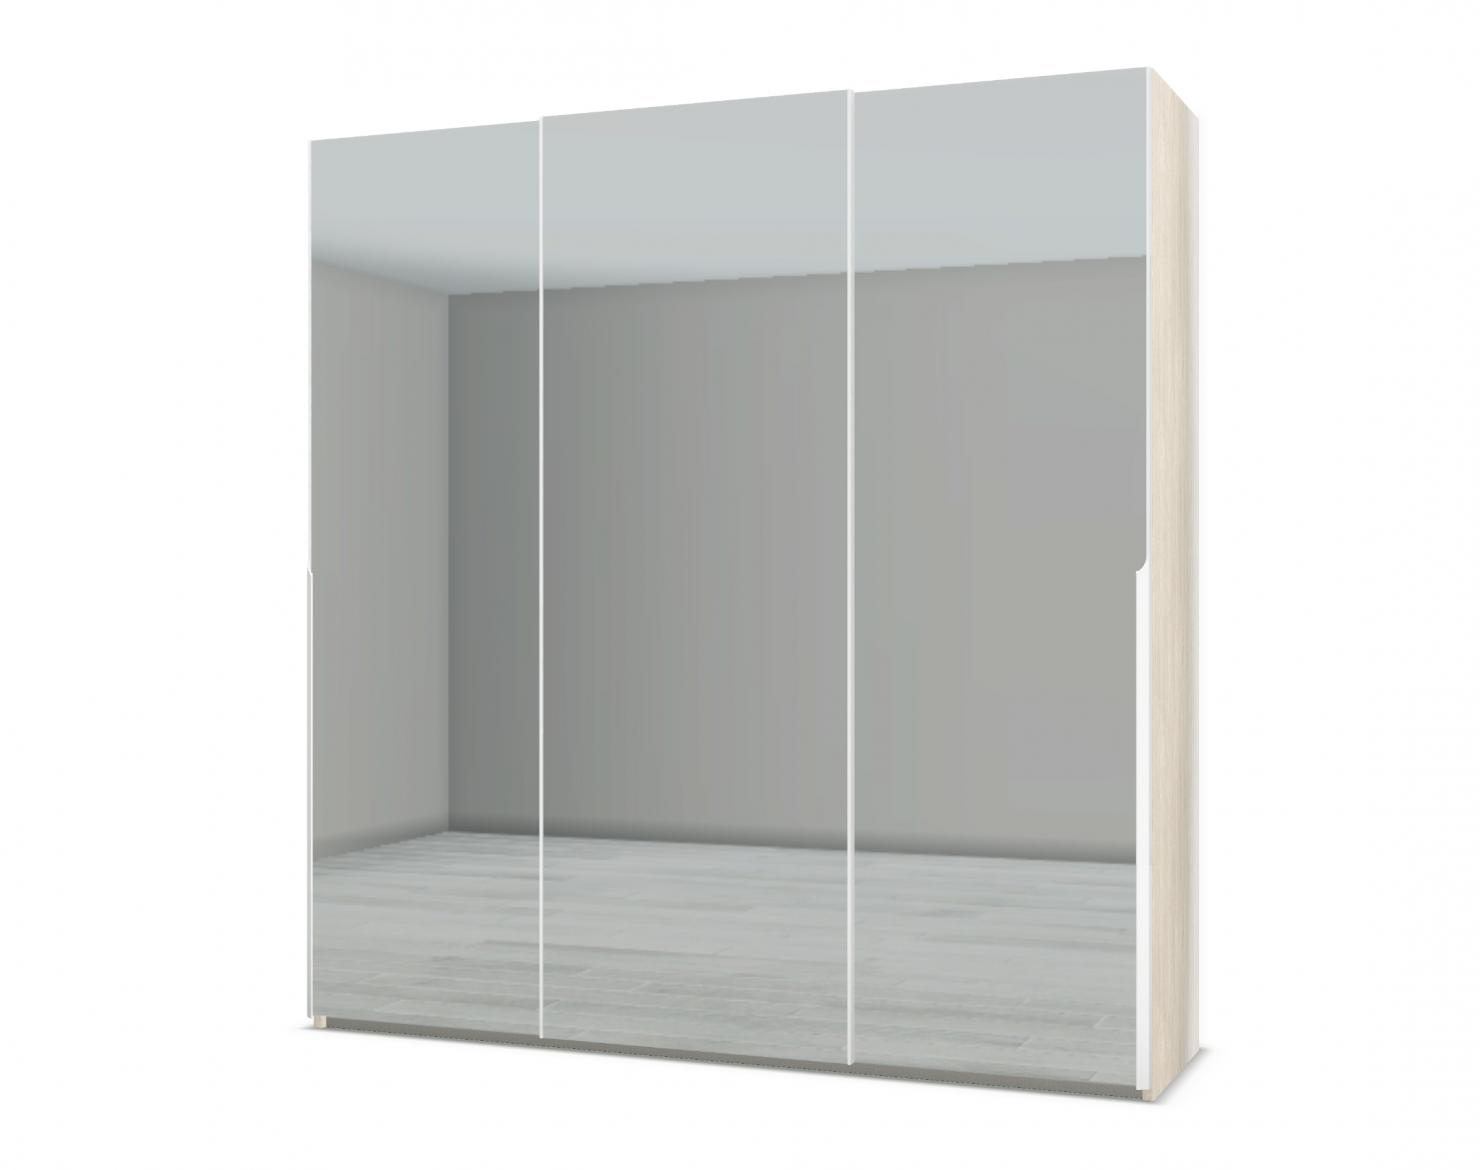 26h31-armoire-3-portes-coulissantes-miroirs-1-90